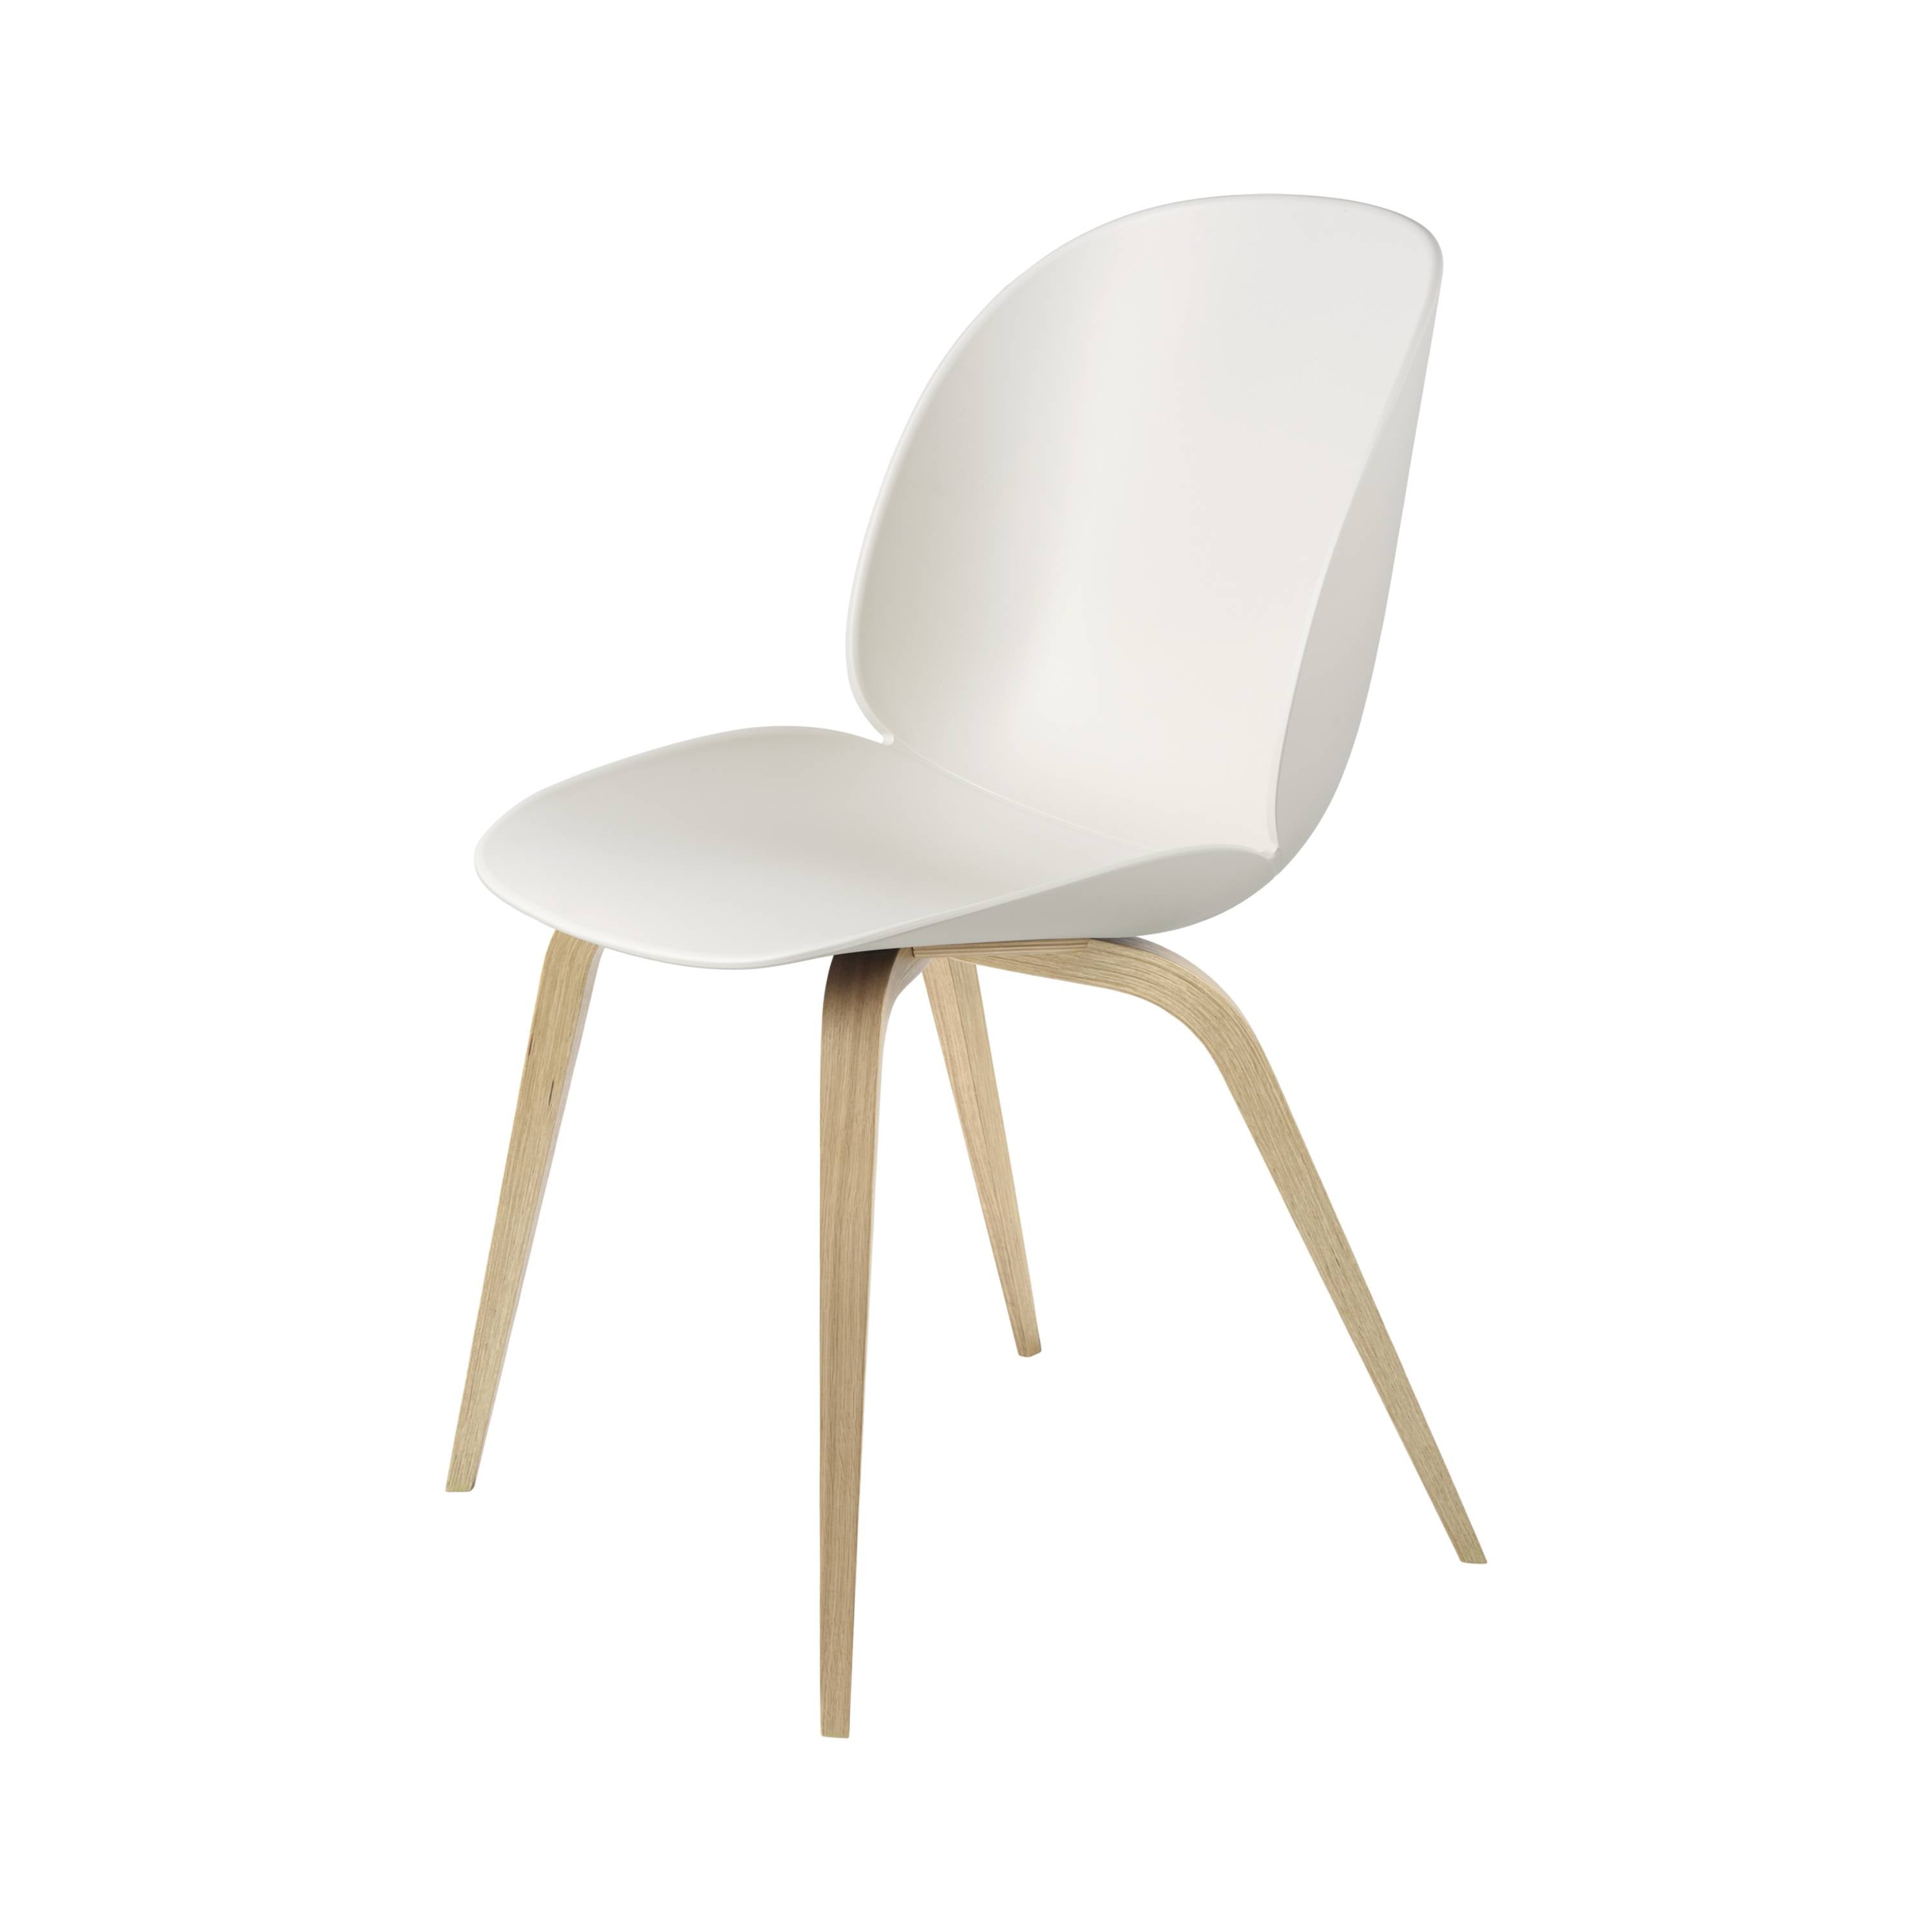 Beetle Dining Chair: Wood Base + Alabaster White + Oak